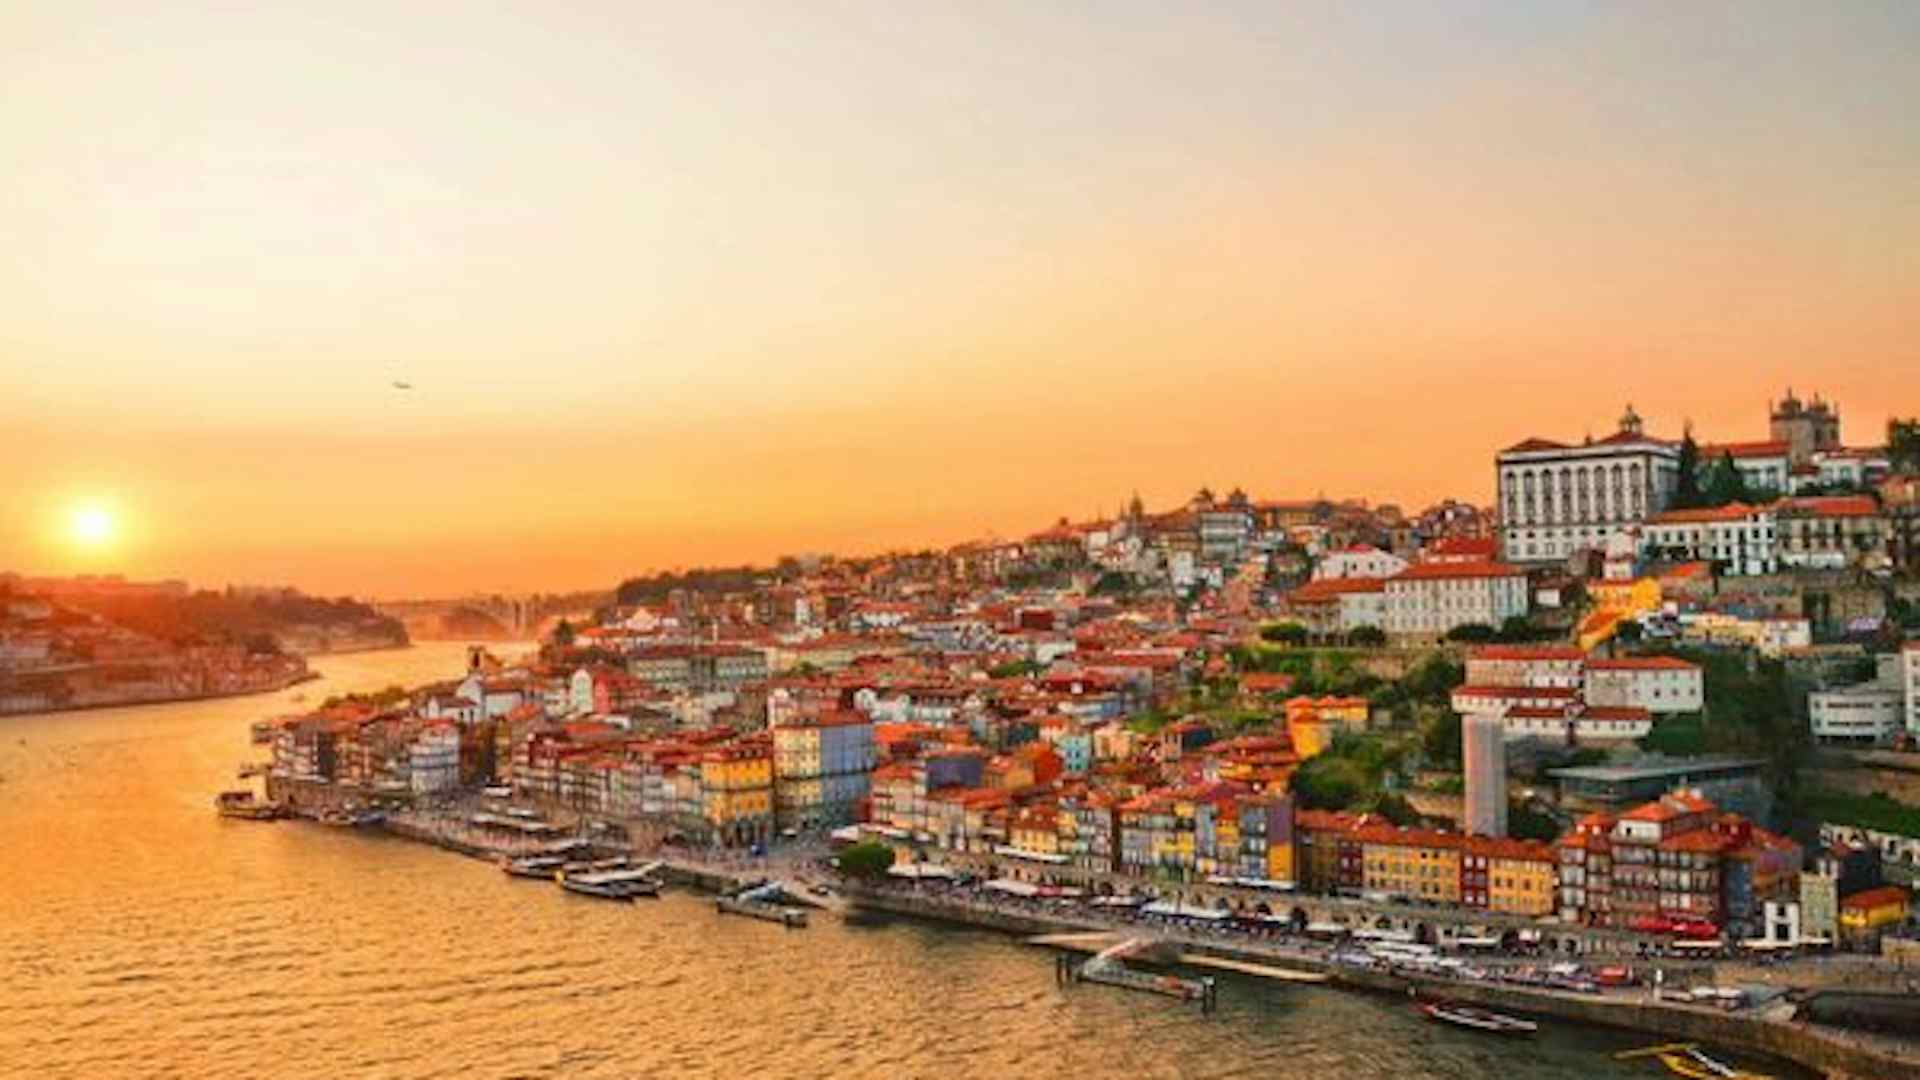 February's International Destination Of The Month: Porto